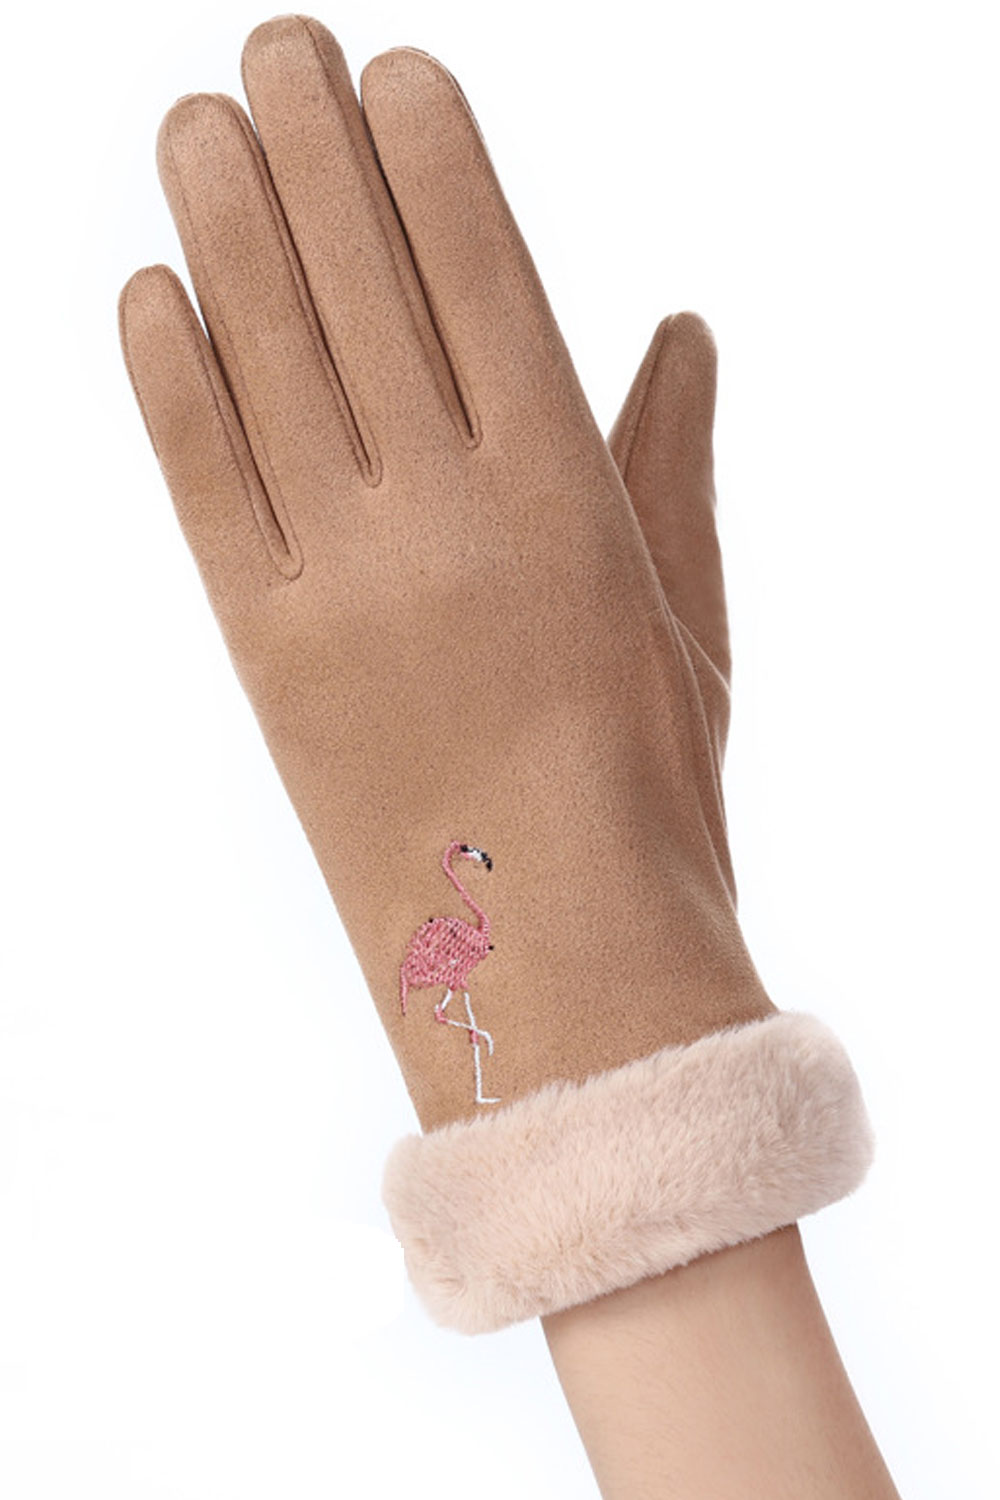 Zumeet Women Casual Thick Warm Winter Gloves